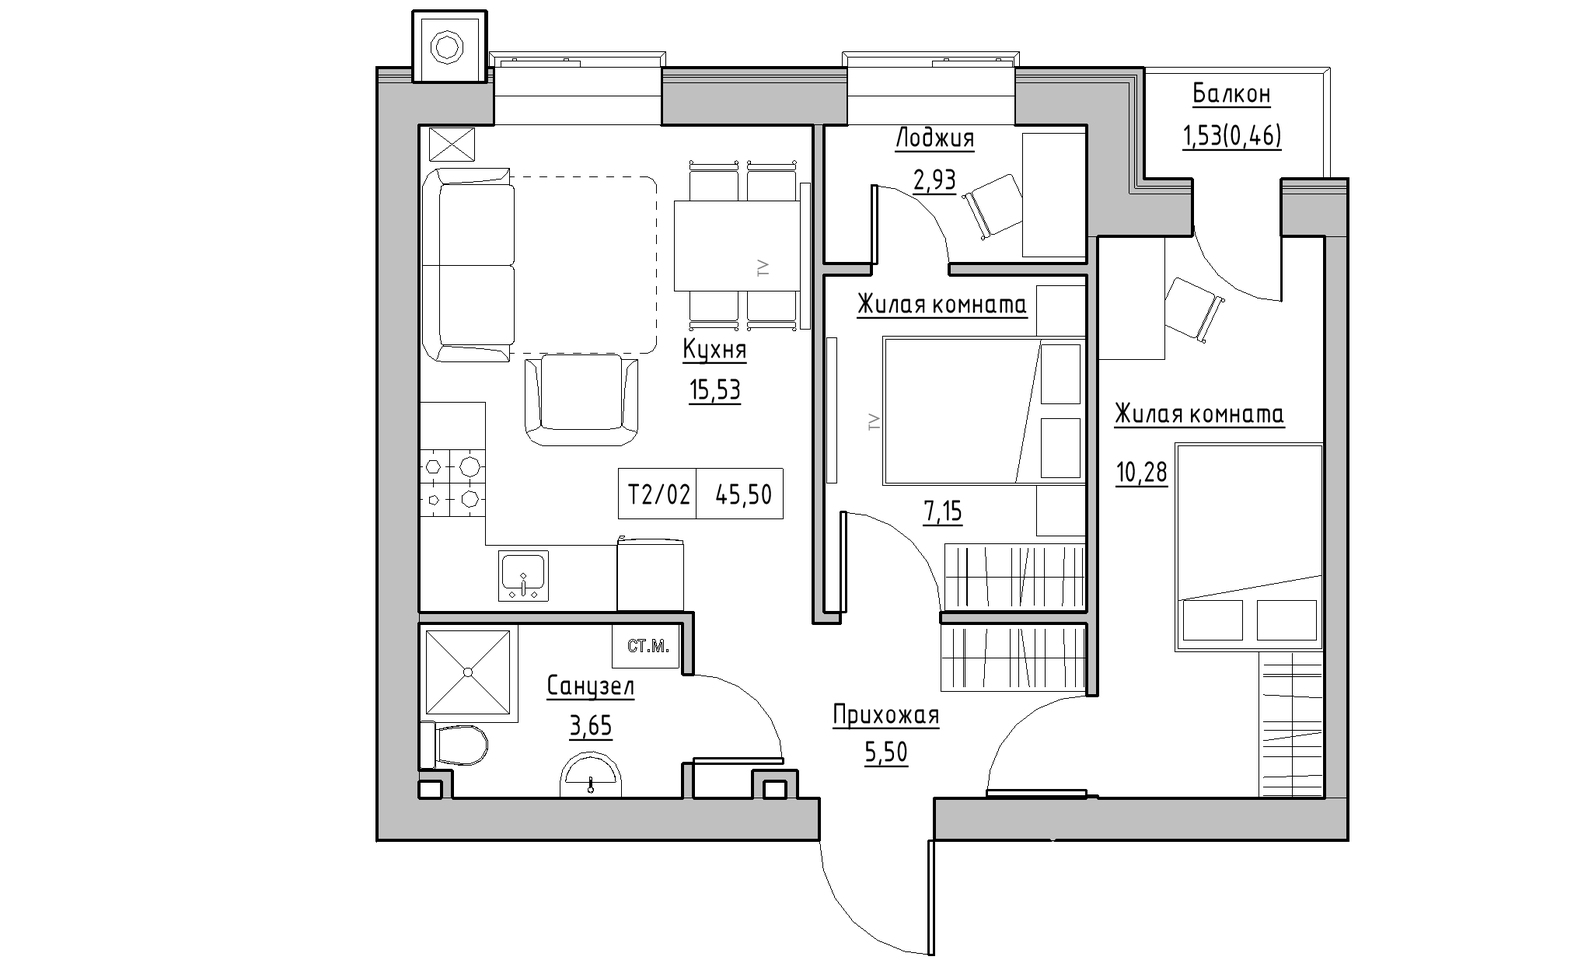 Planning 2-rm flats area 45.5m2, KS-014-02/0008.